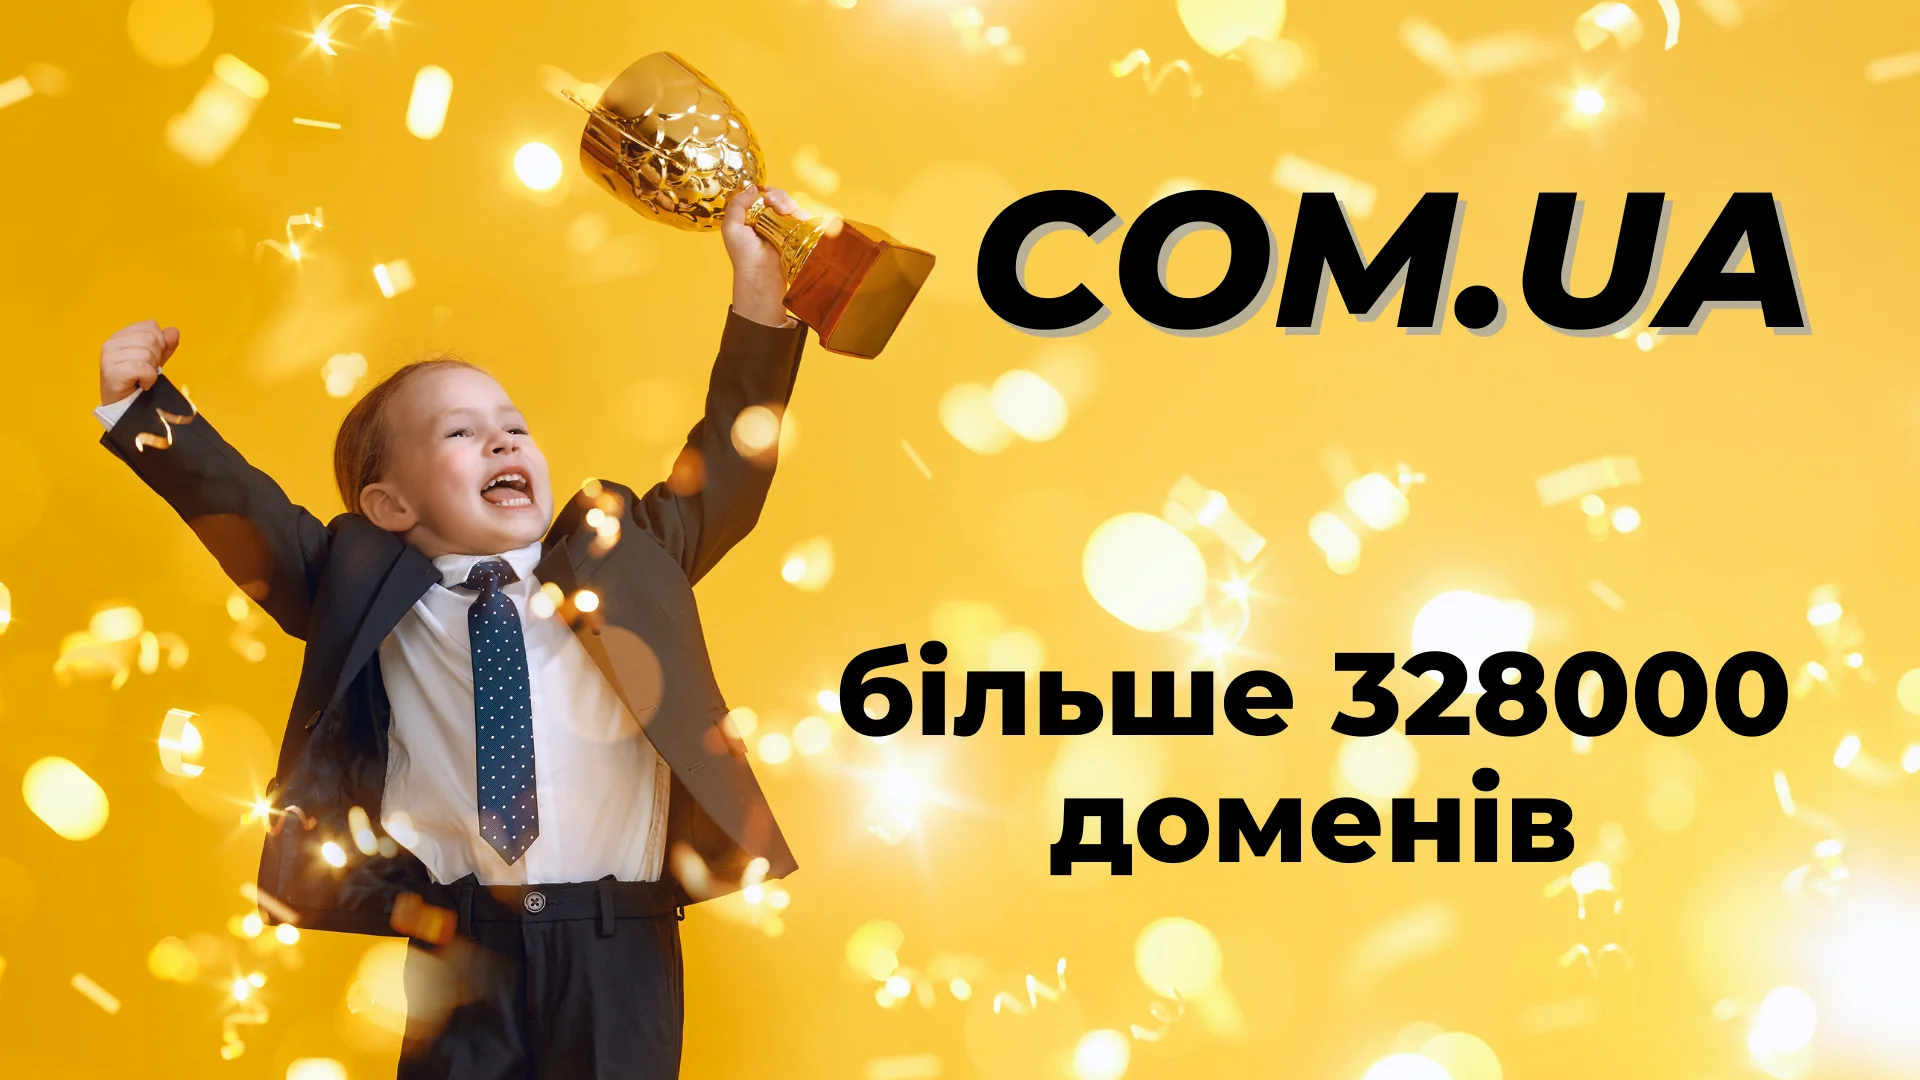 COM.UA is the most popular Ukrainian domain